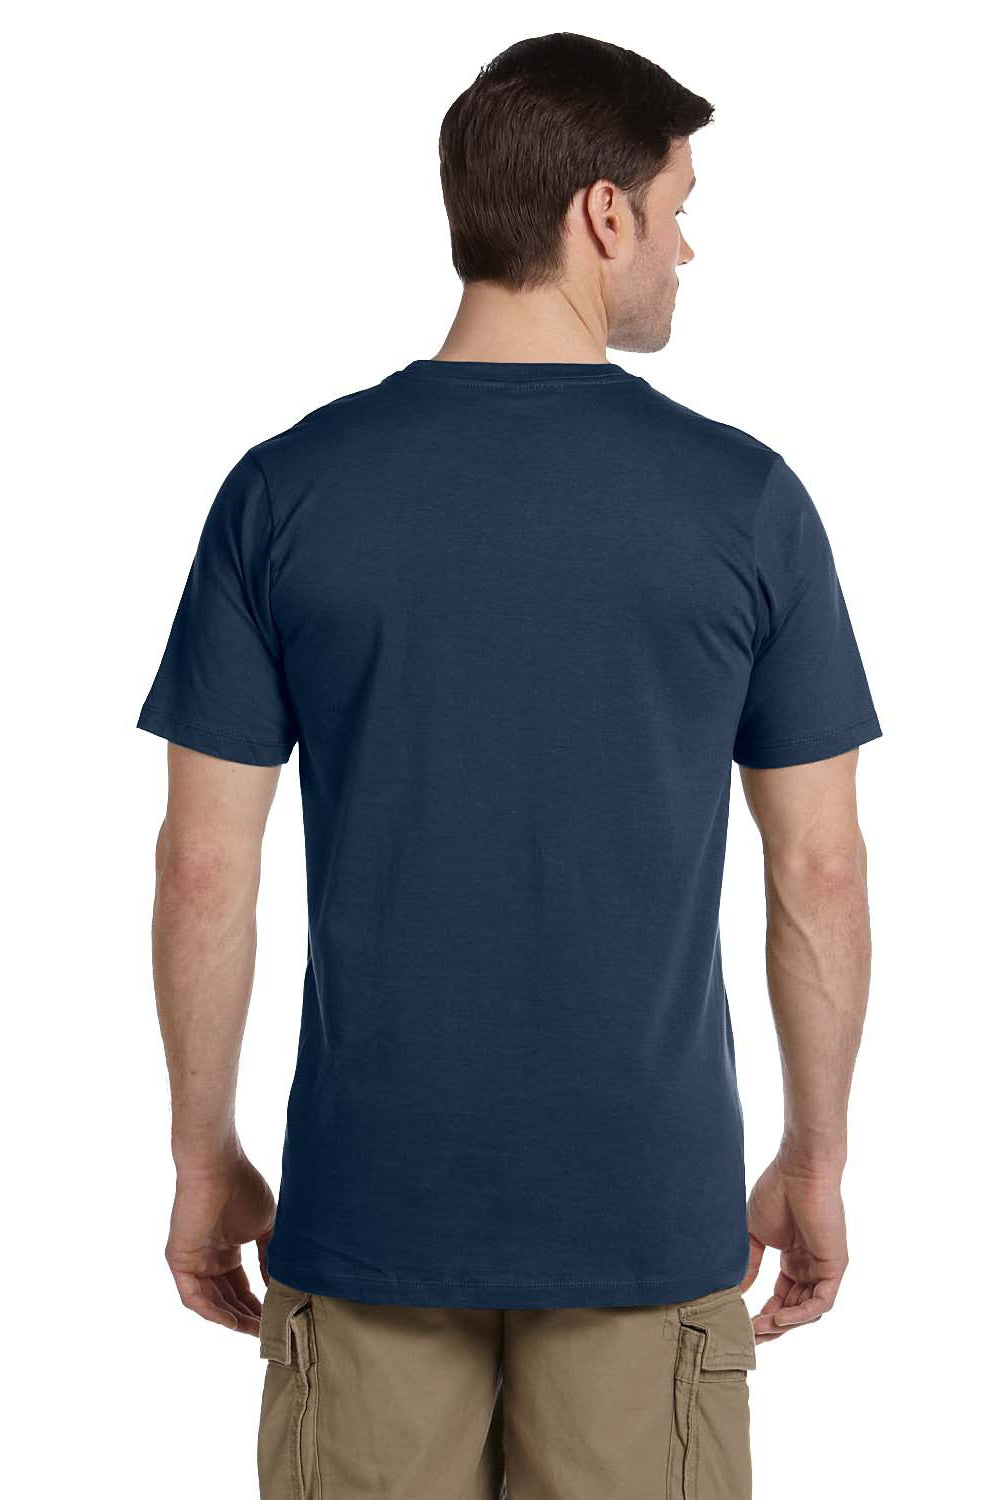 Econscious EC1075 Mens Short Sleeve Crewneck T-Shirt Navy Blue Back